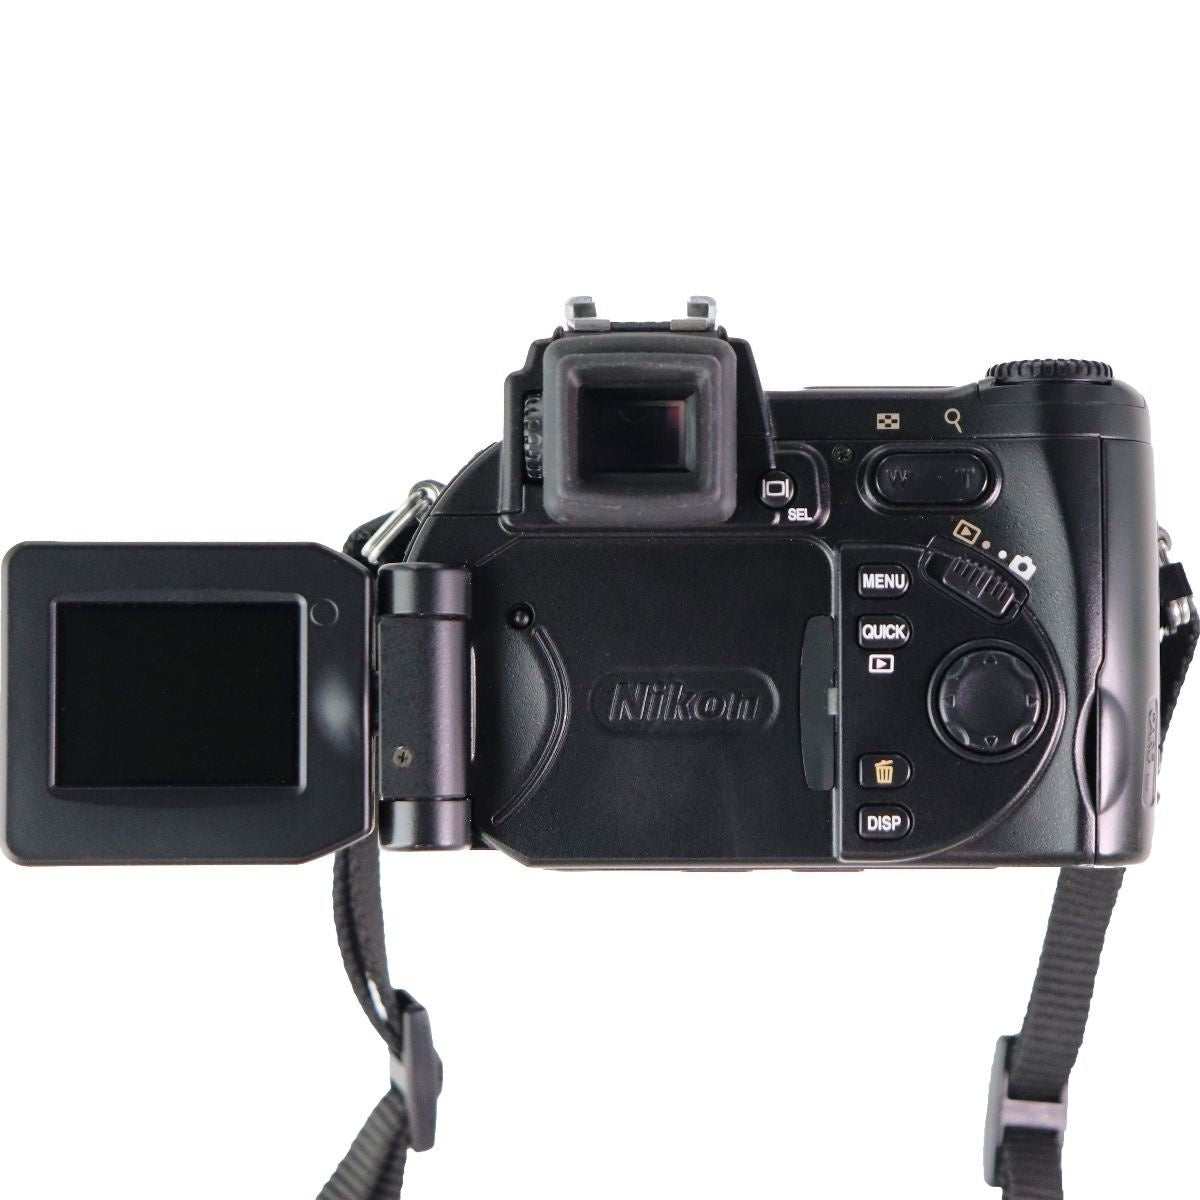 Nikon Coolpix 5700 5MP Digital Camera w/ 8x Optical Zoom - Black Digital Camera - Digital & DSLR Cameras Nikon    - Simple Cell Bulk Wholesale Pricing - USA Seller